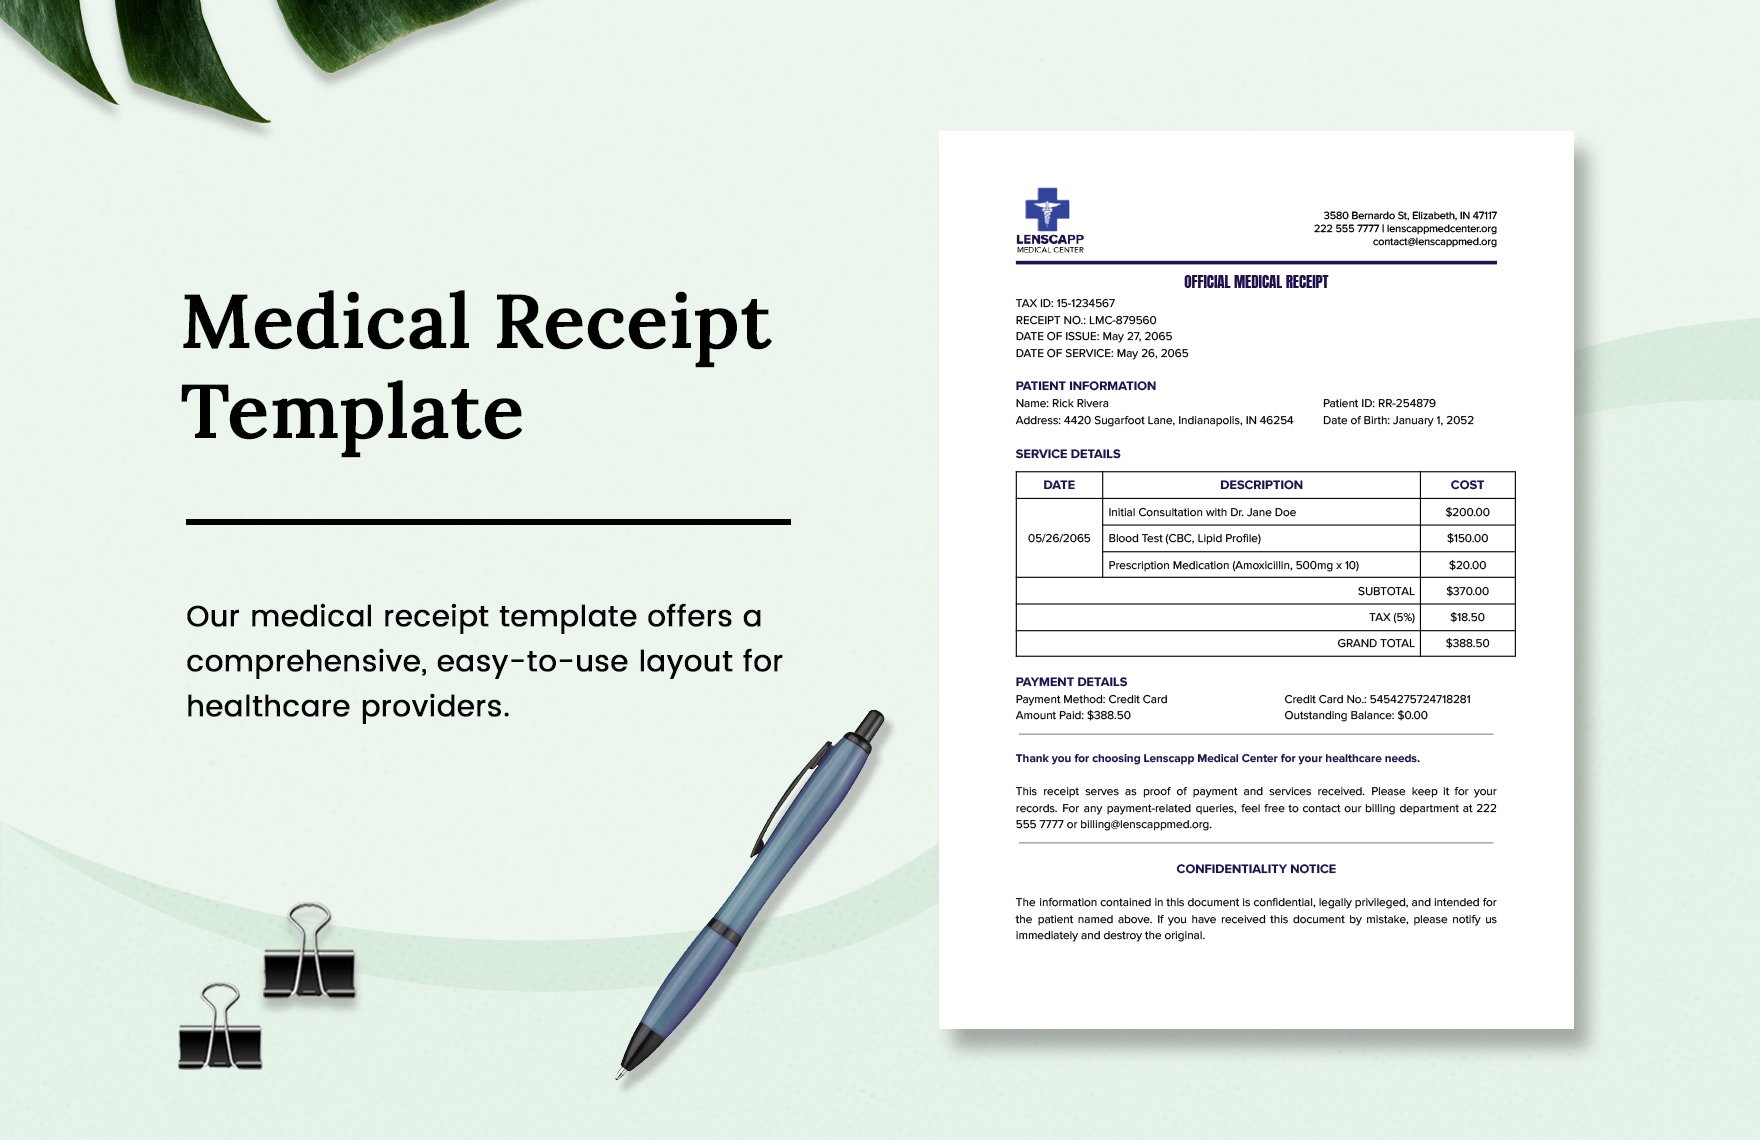 Medical Receipt Template